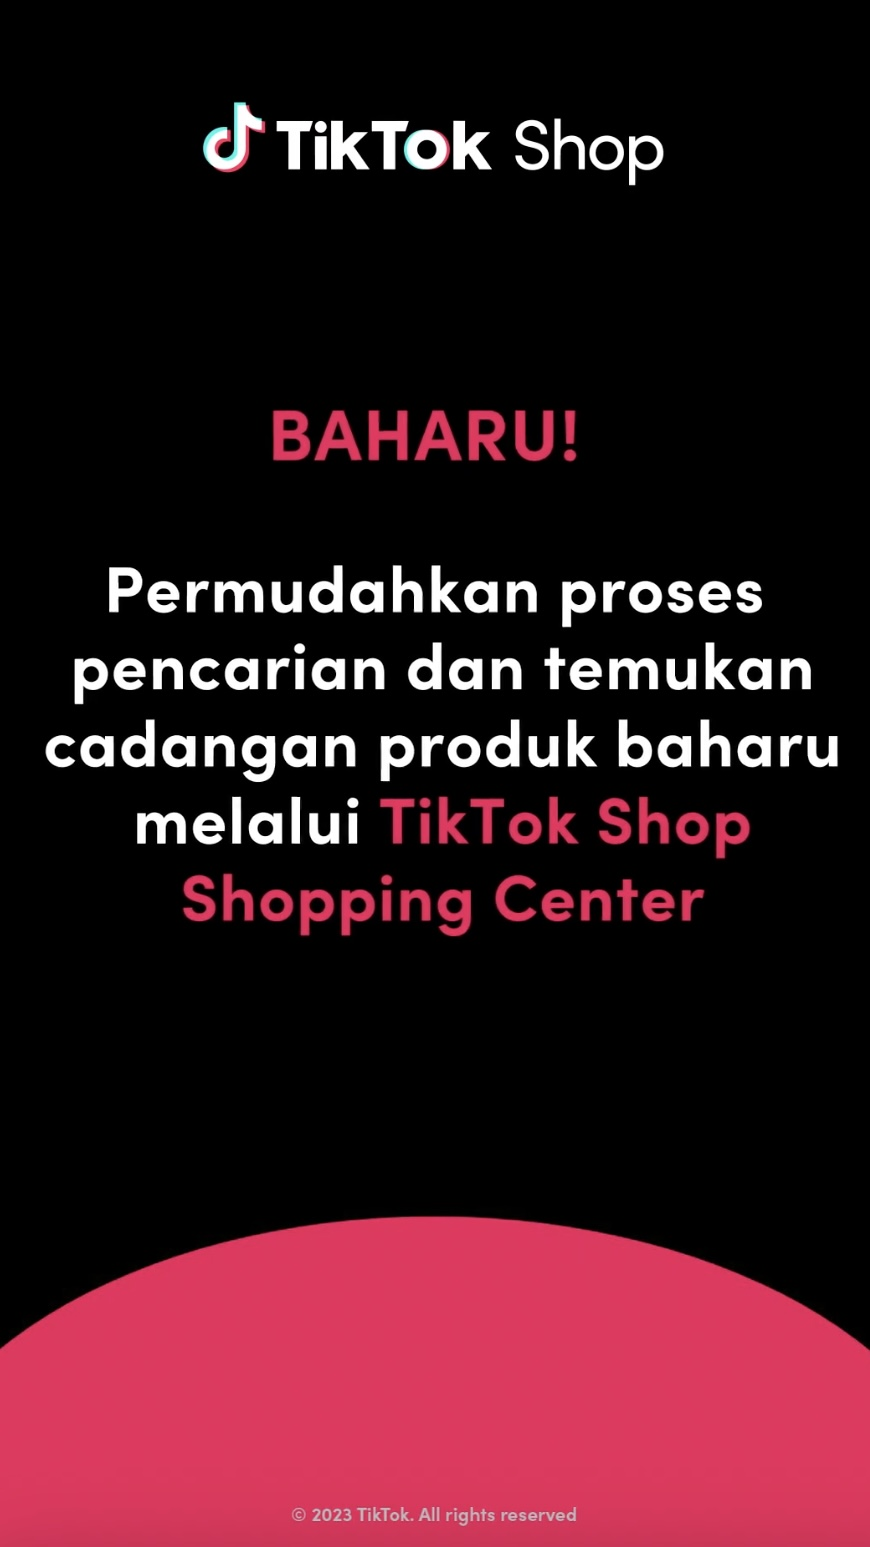 tiktok shop shopping center